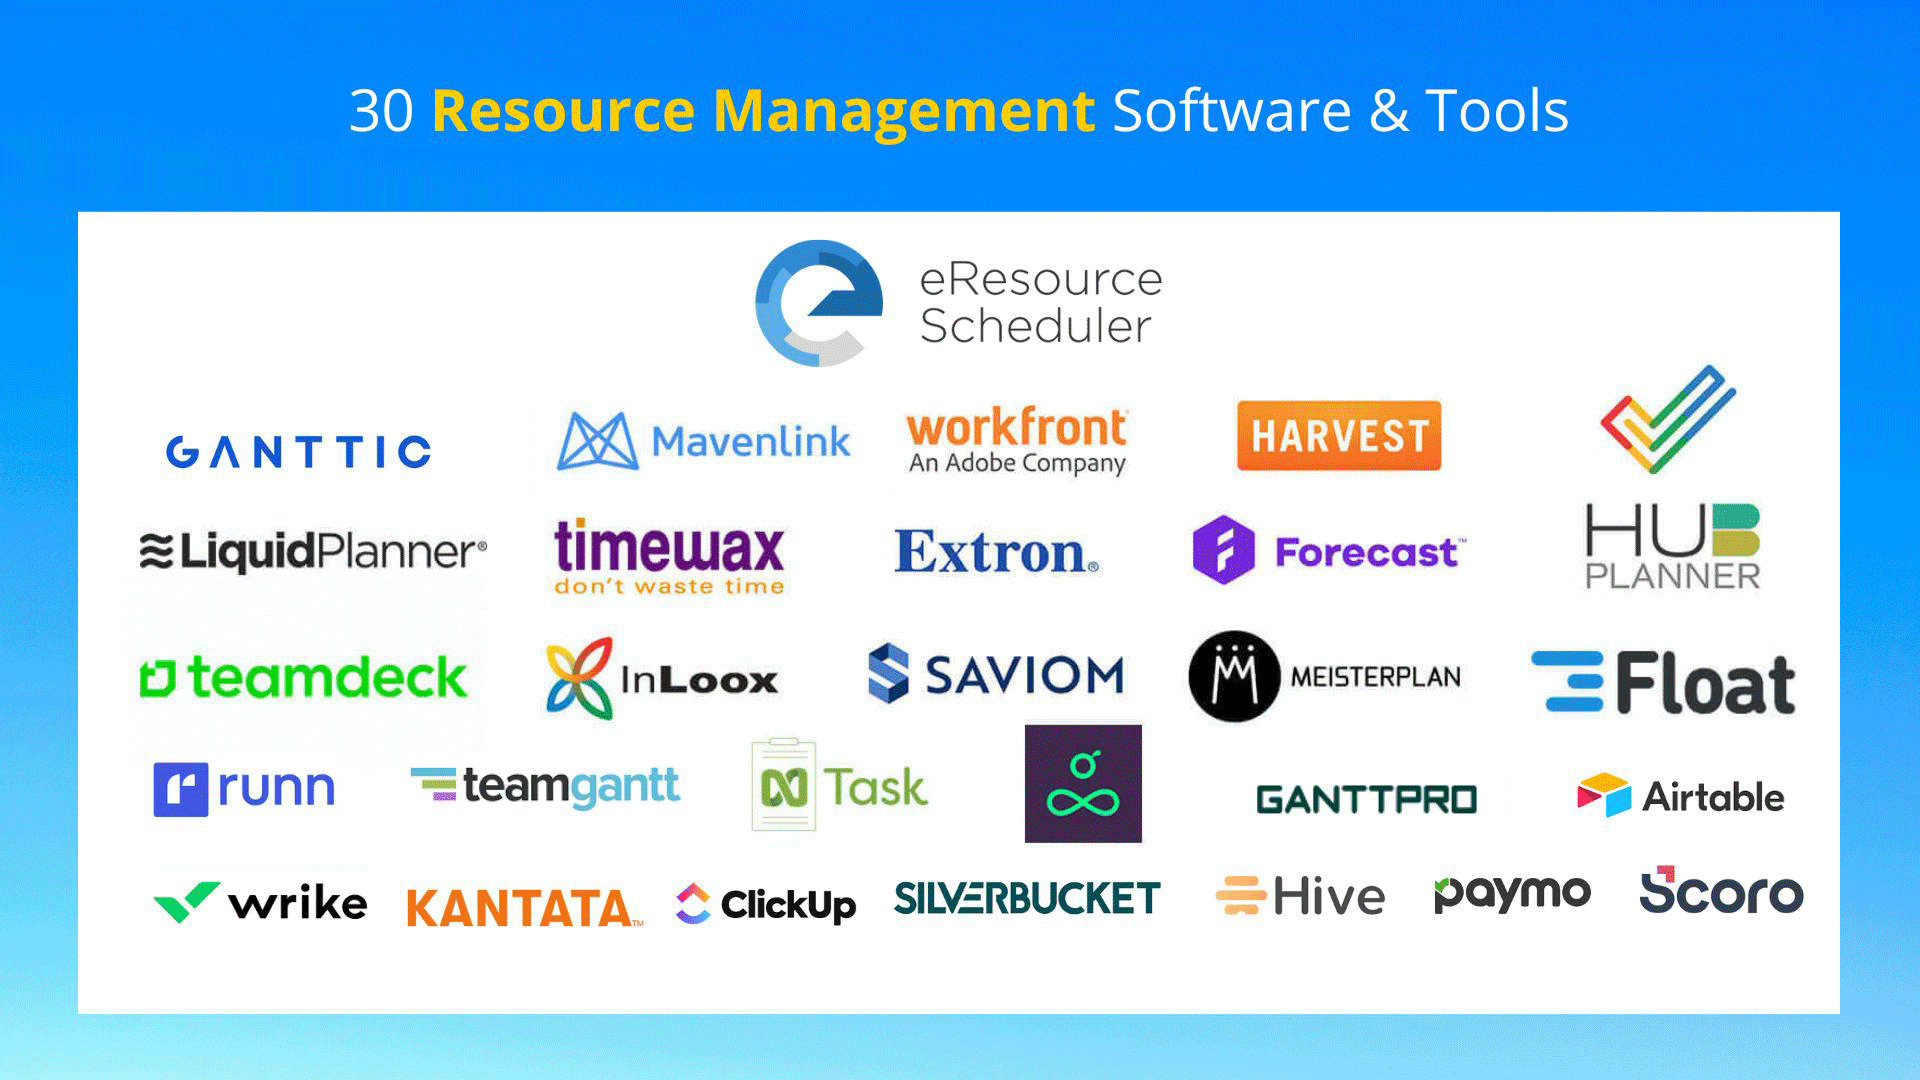 Resource management software